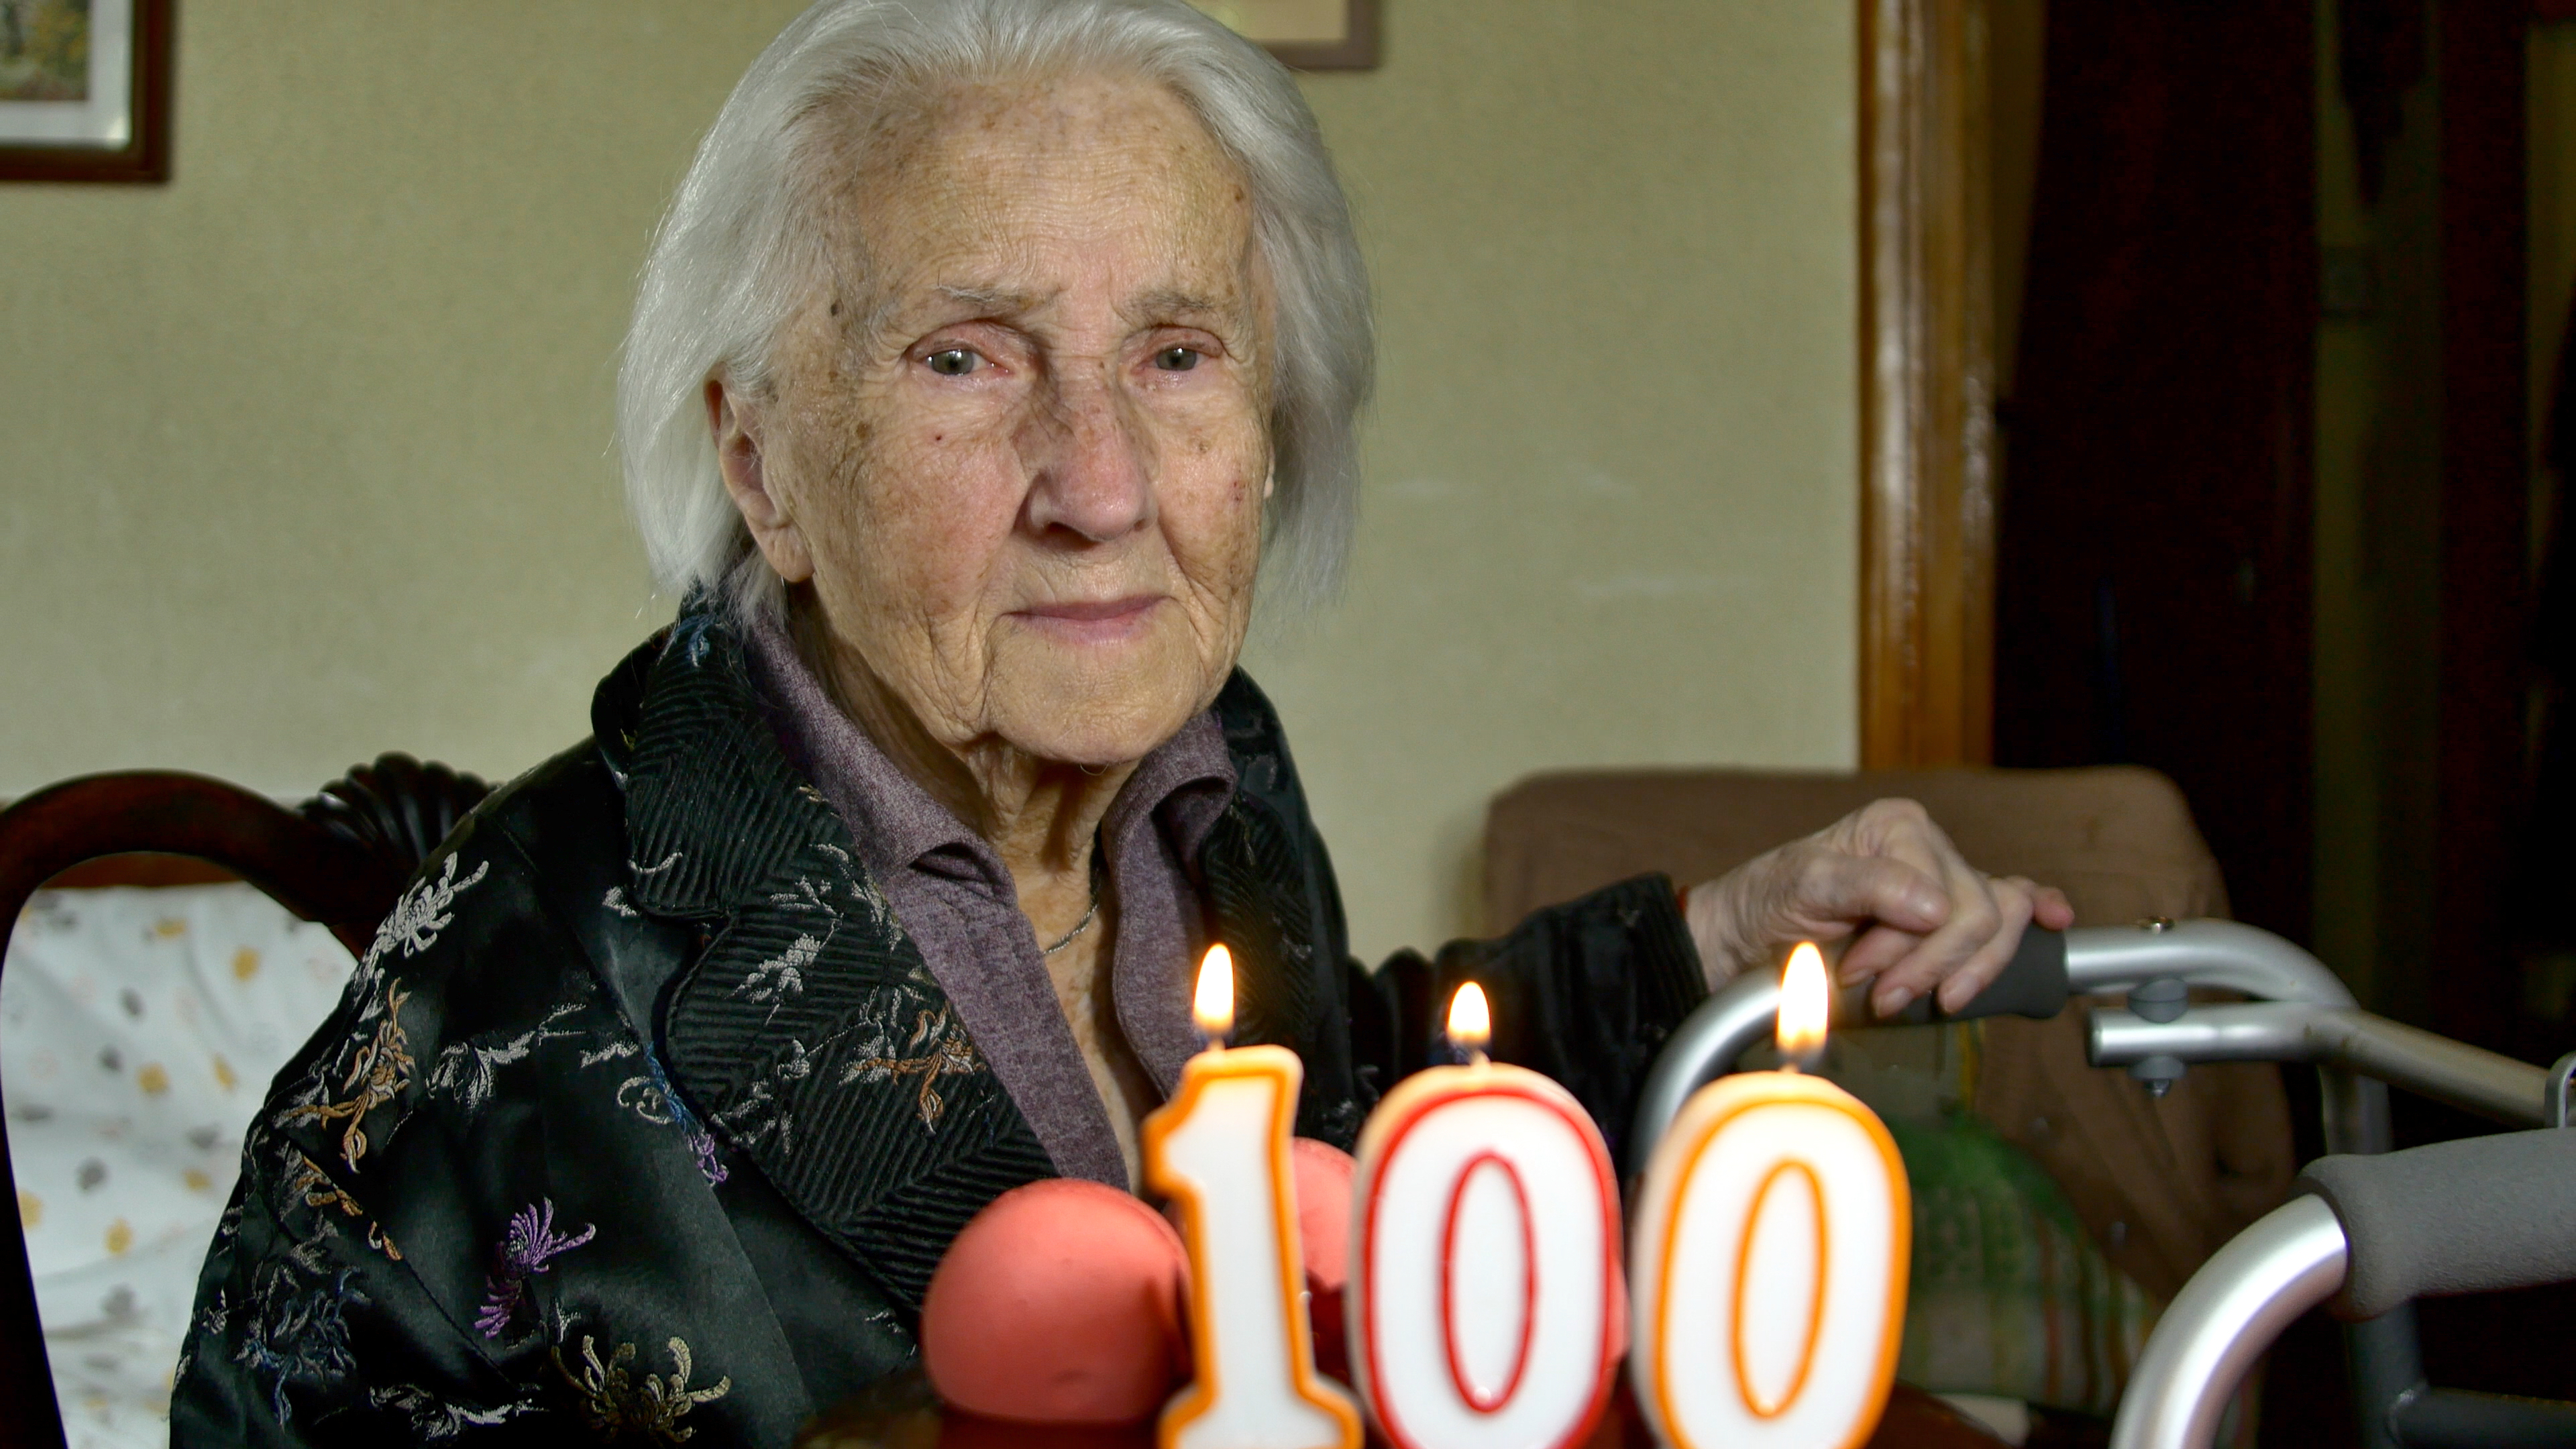 100 years people